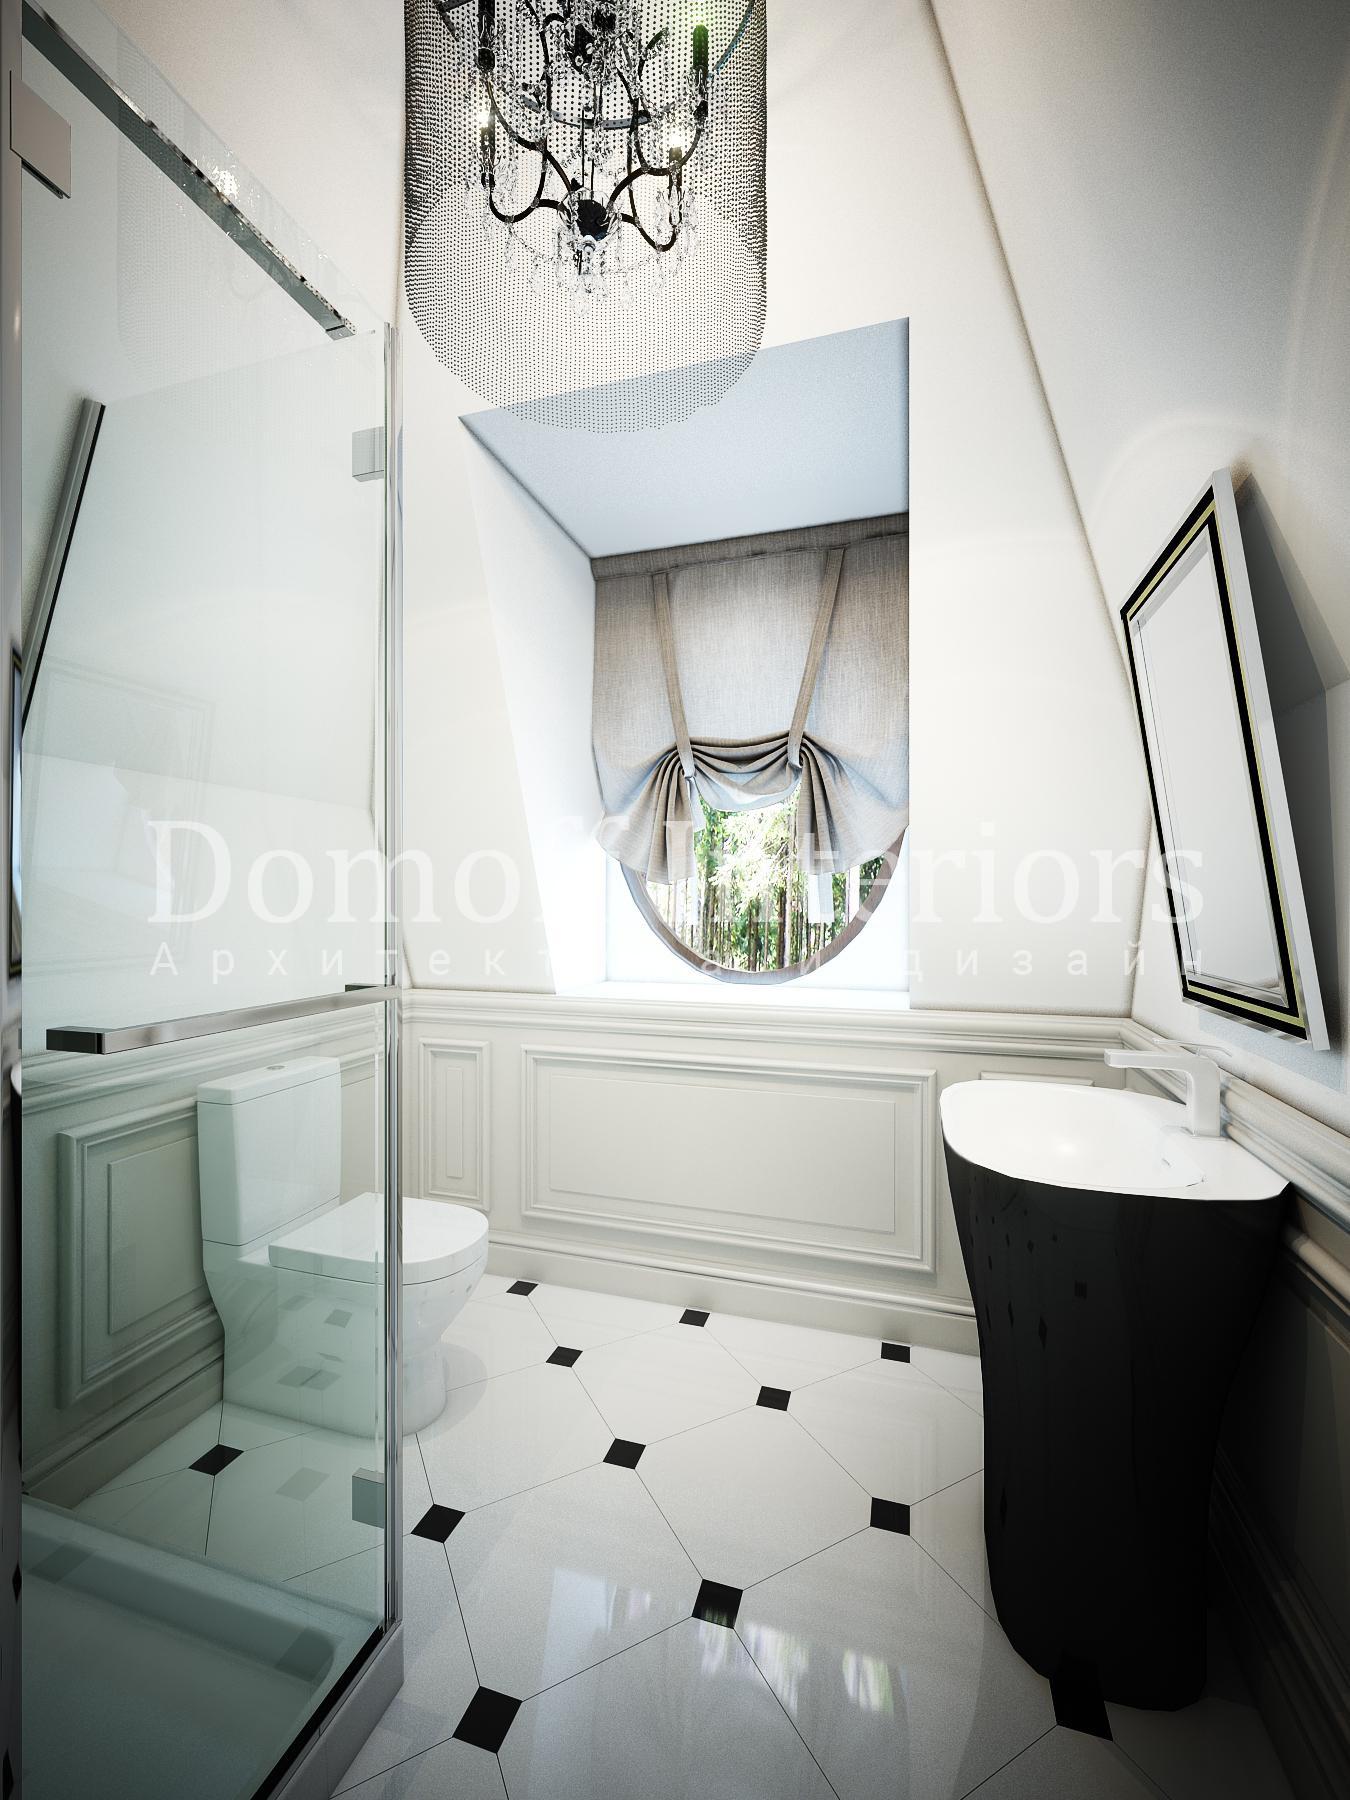 Attic bathroom made in the style of Contemporary classics